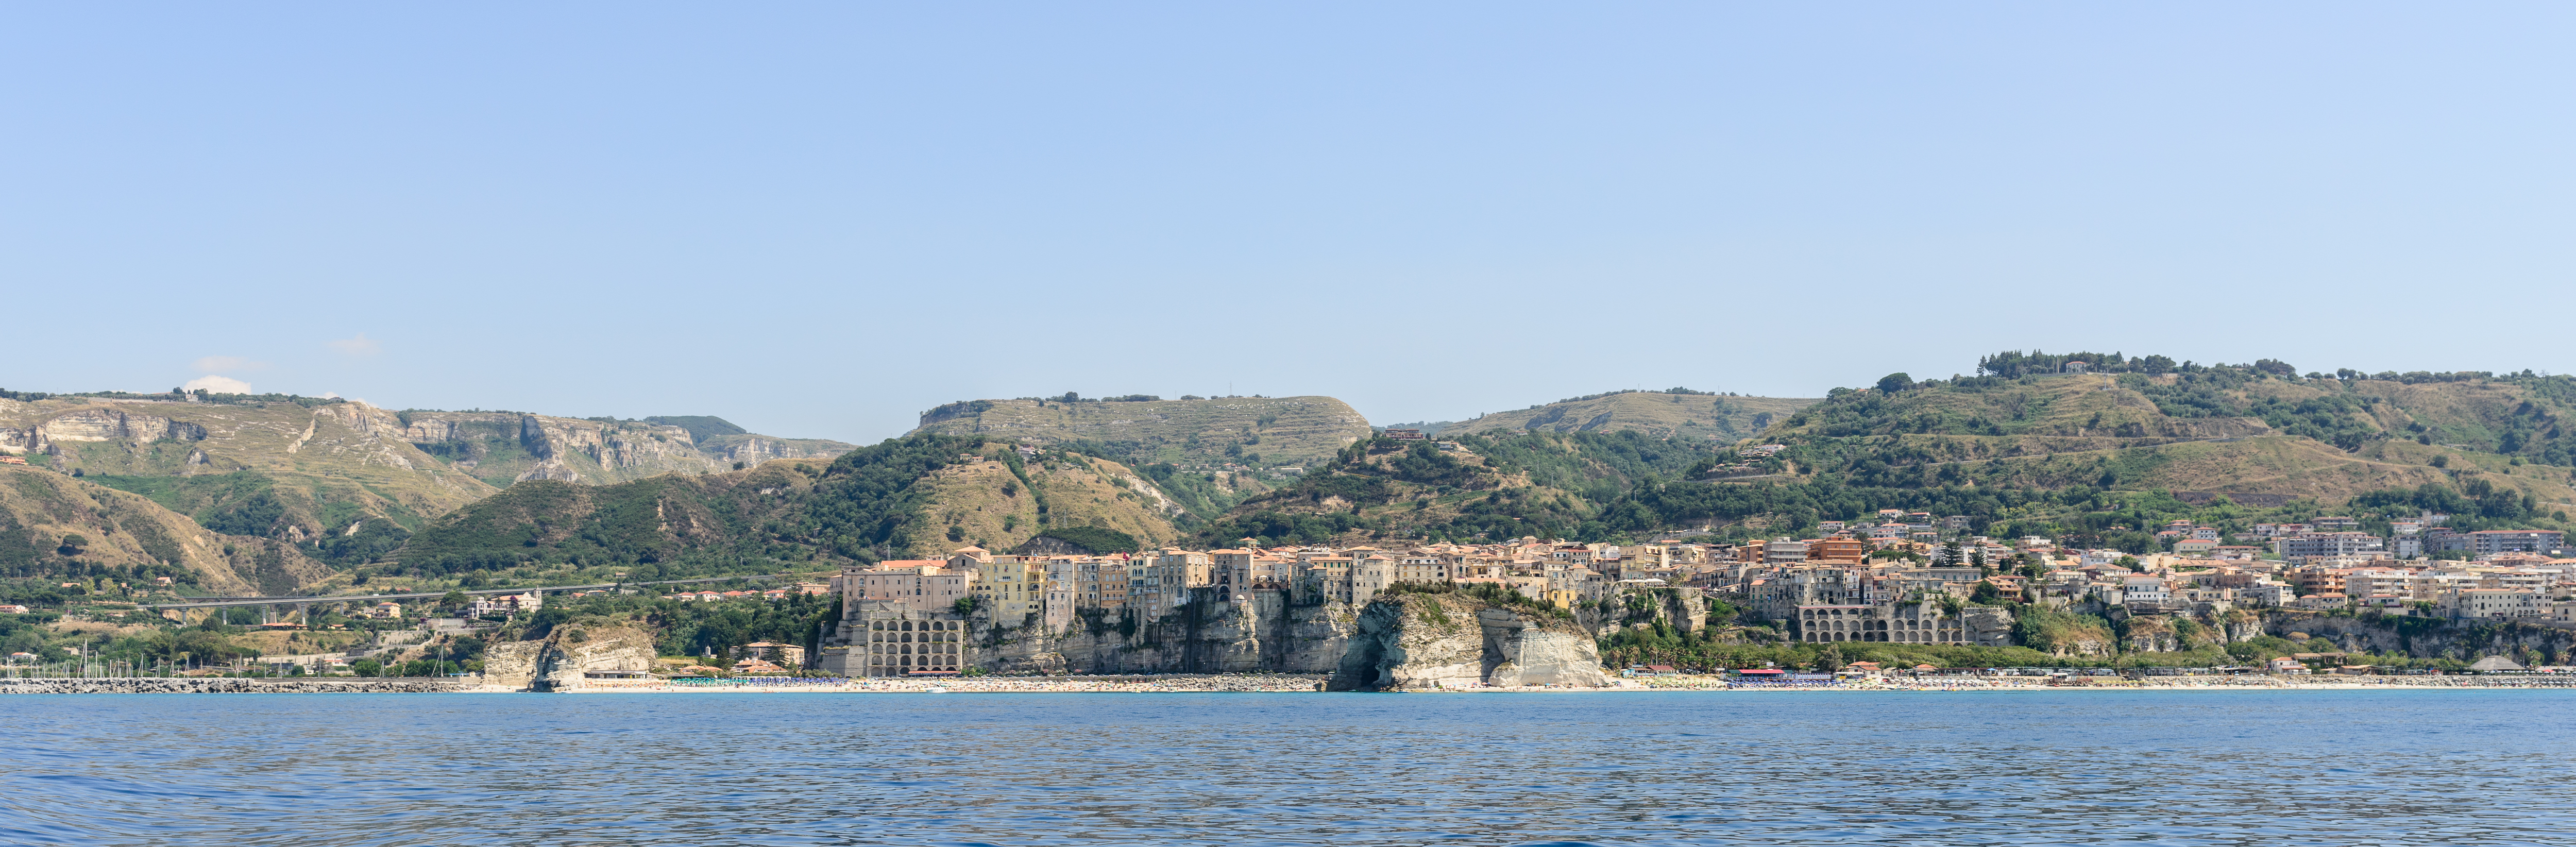 Tropea panorama - Calabria - Italy - July 18th 2013 - 02